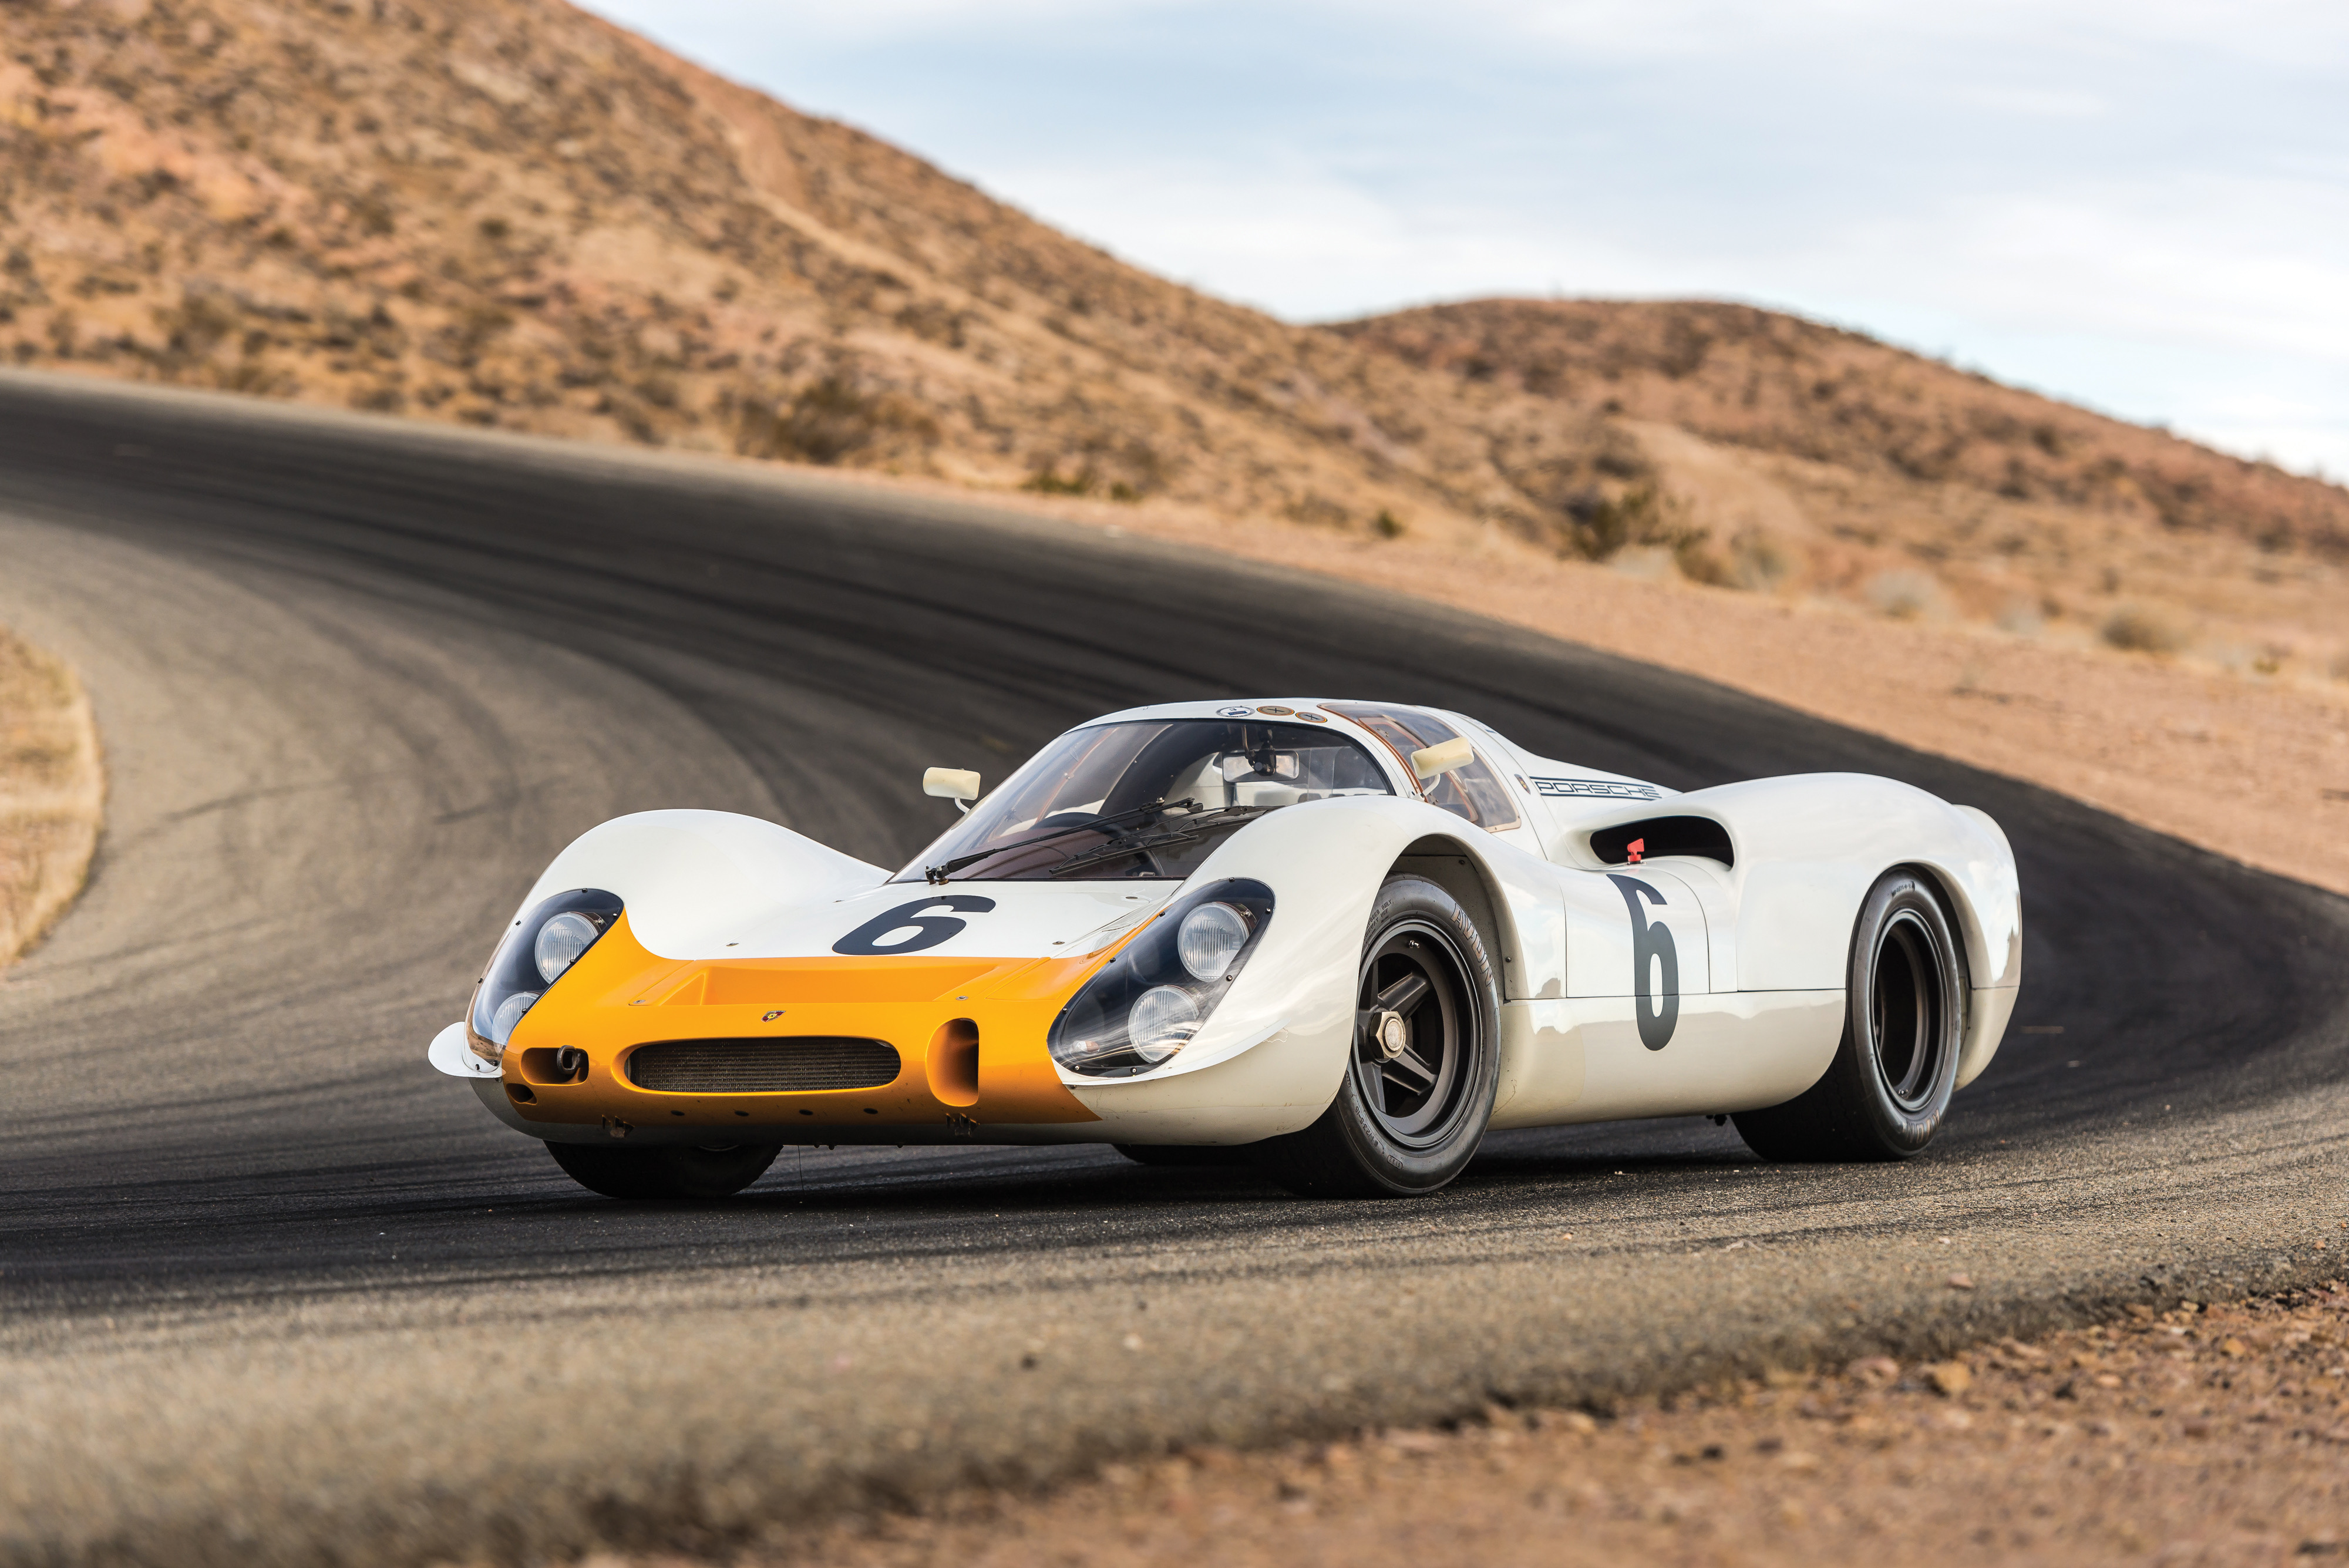 monterey, Historic Porsche factory racer joins RM Sotheby’s Monterey sale docket, ClassicCars.com Journal